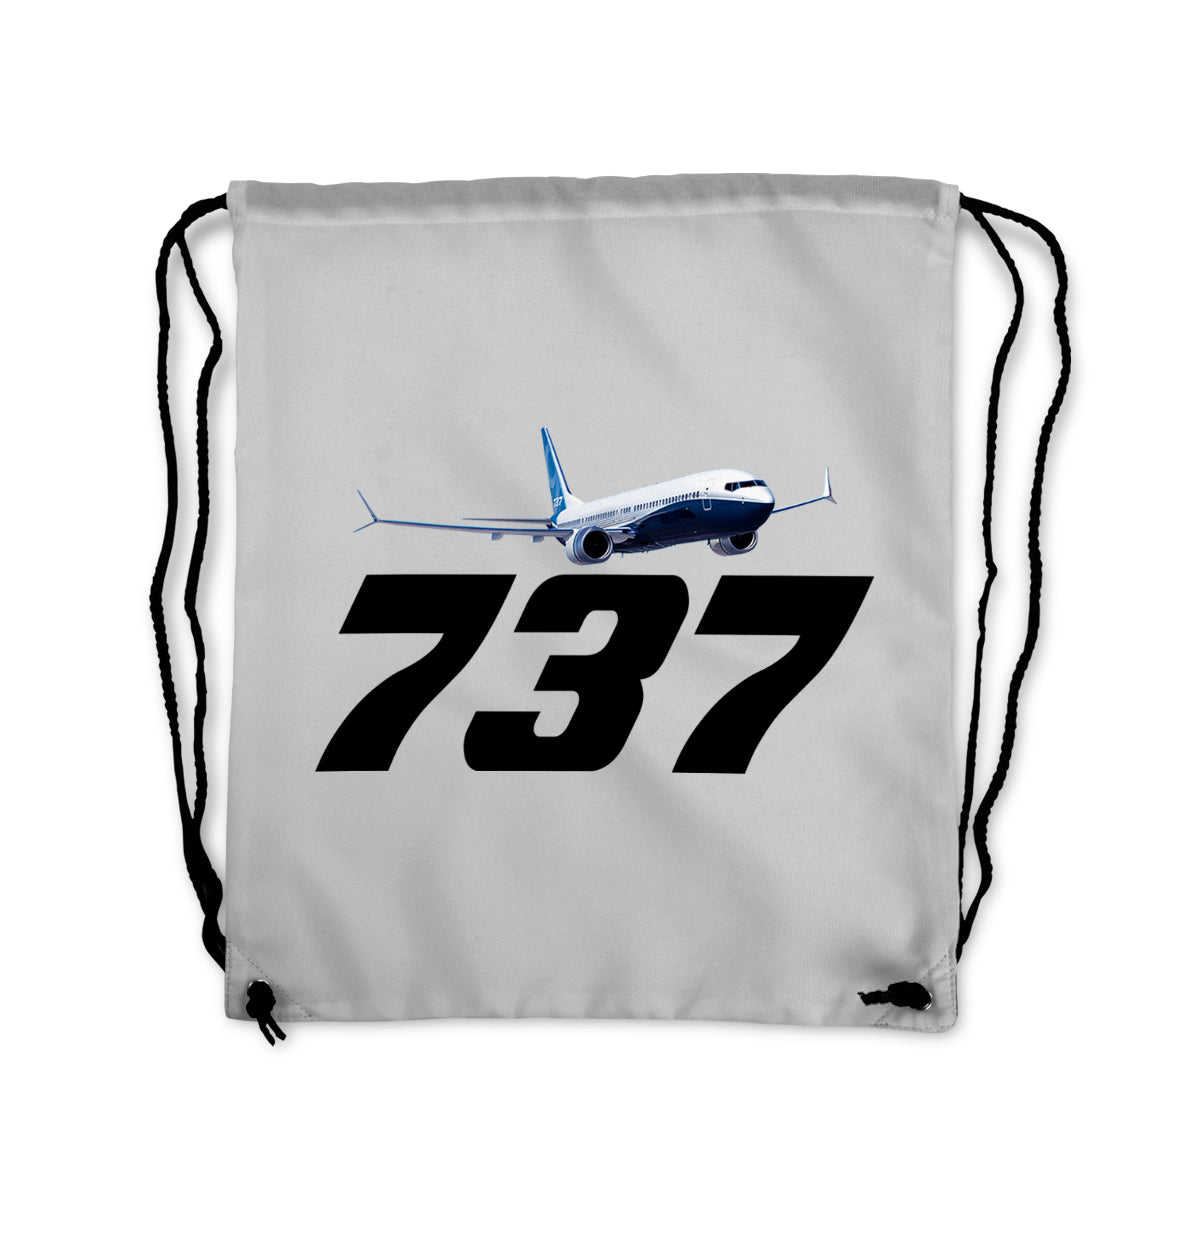 Super Boeing 737-800 Designed Drawstring Bags